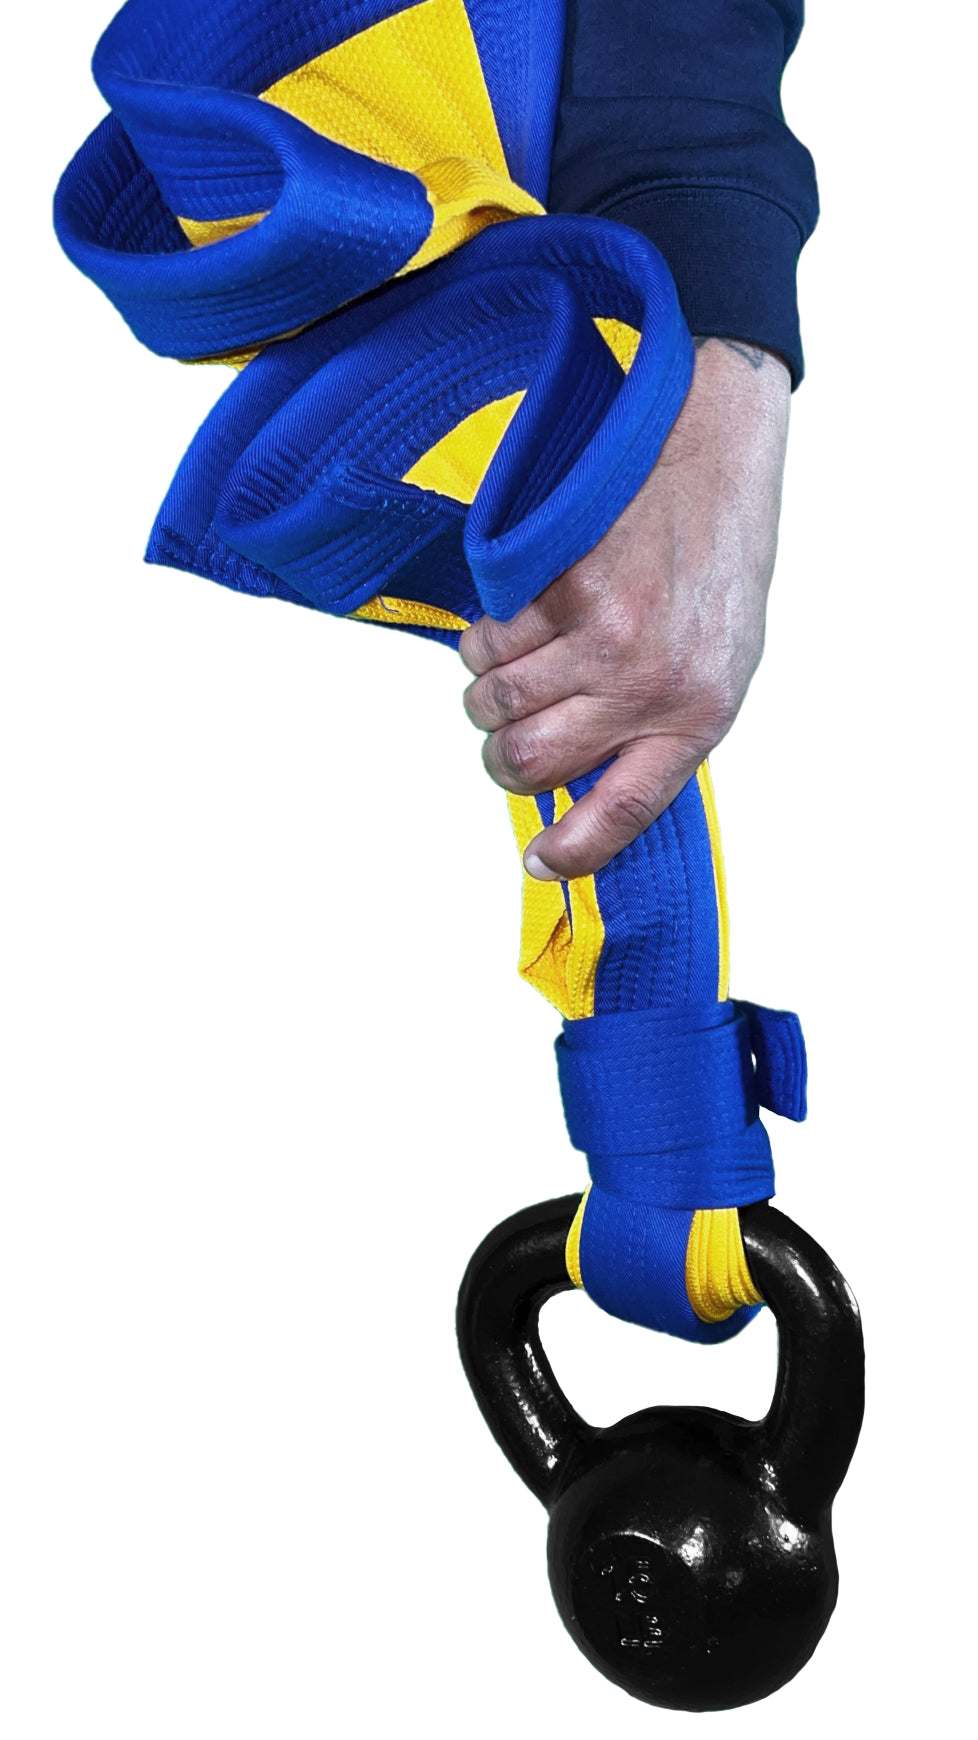 The Gi Grip (Blue & Yellow)